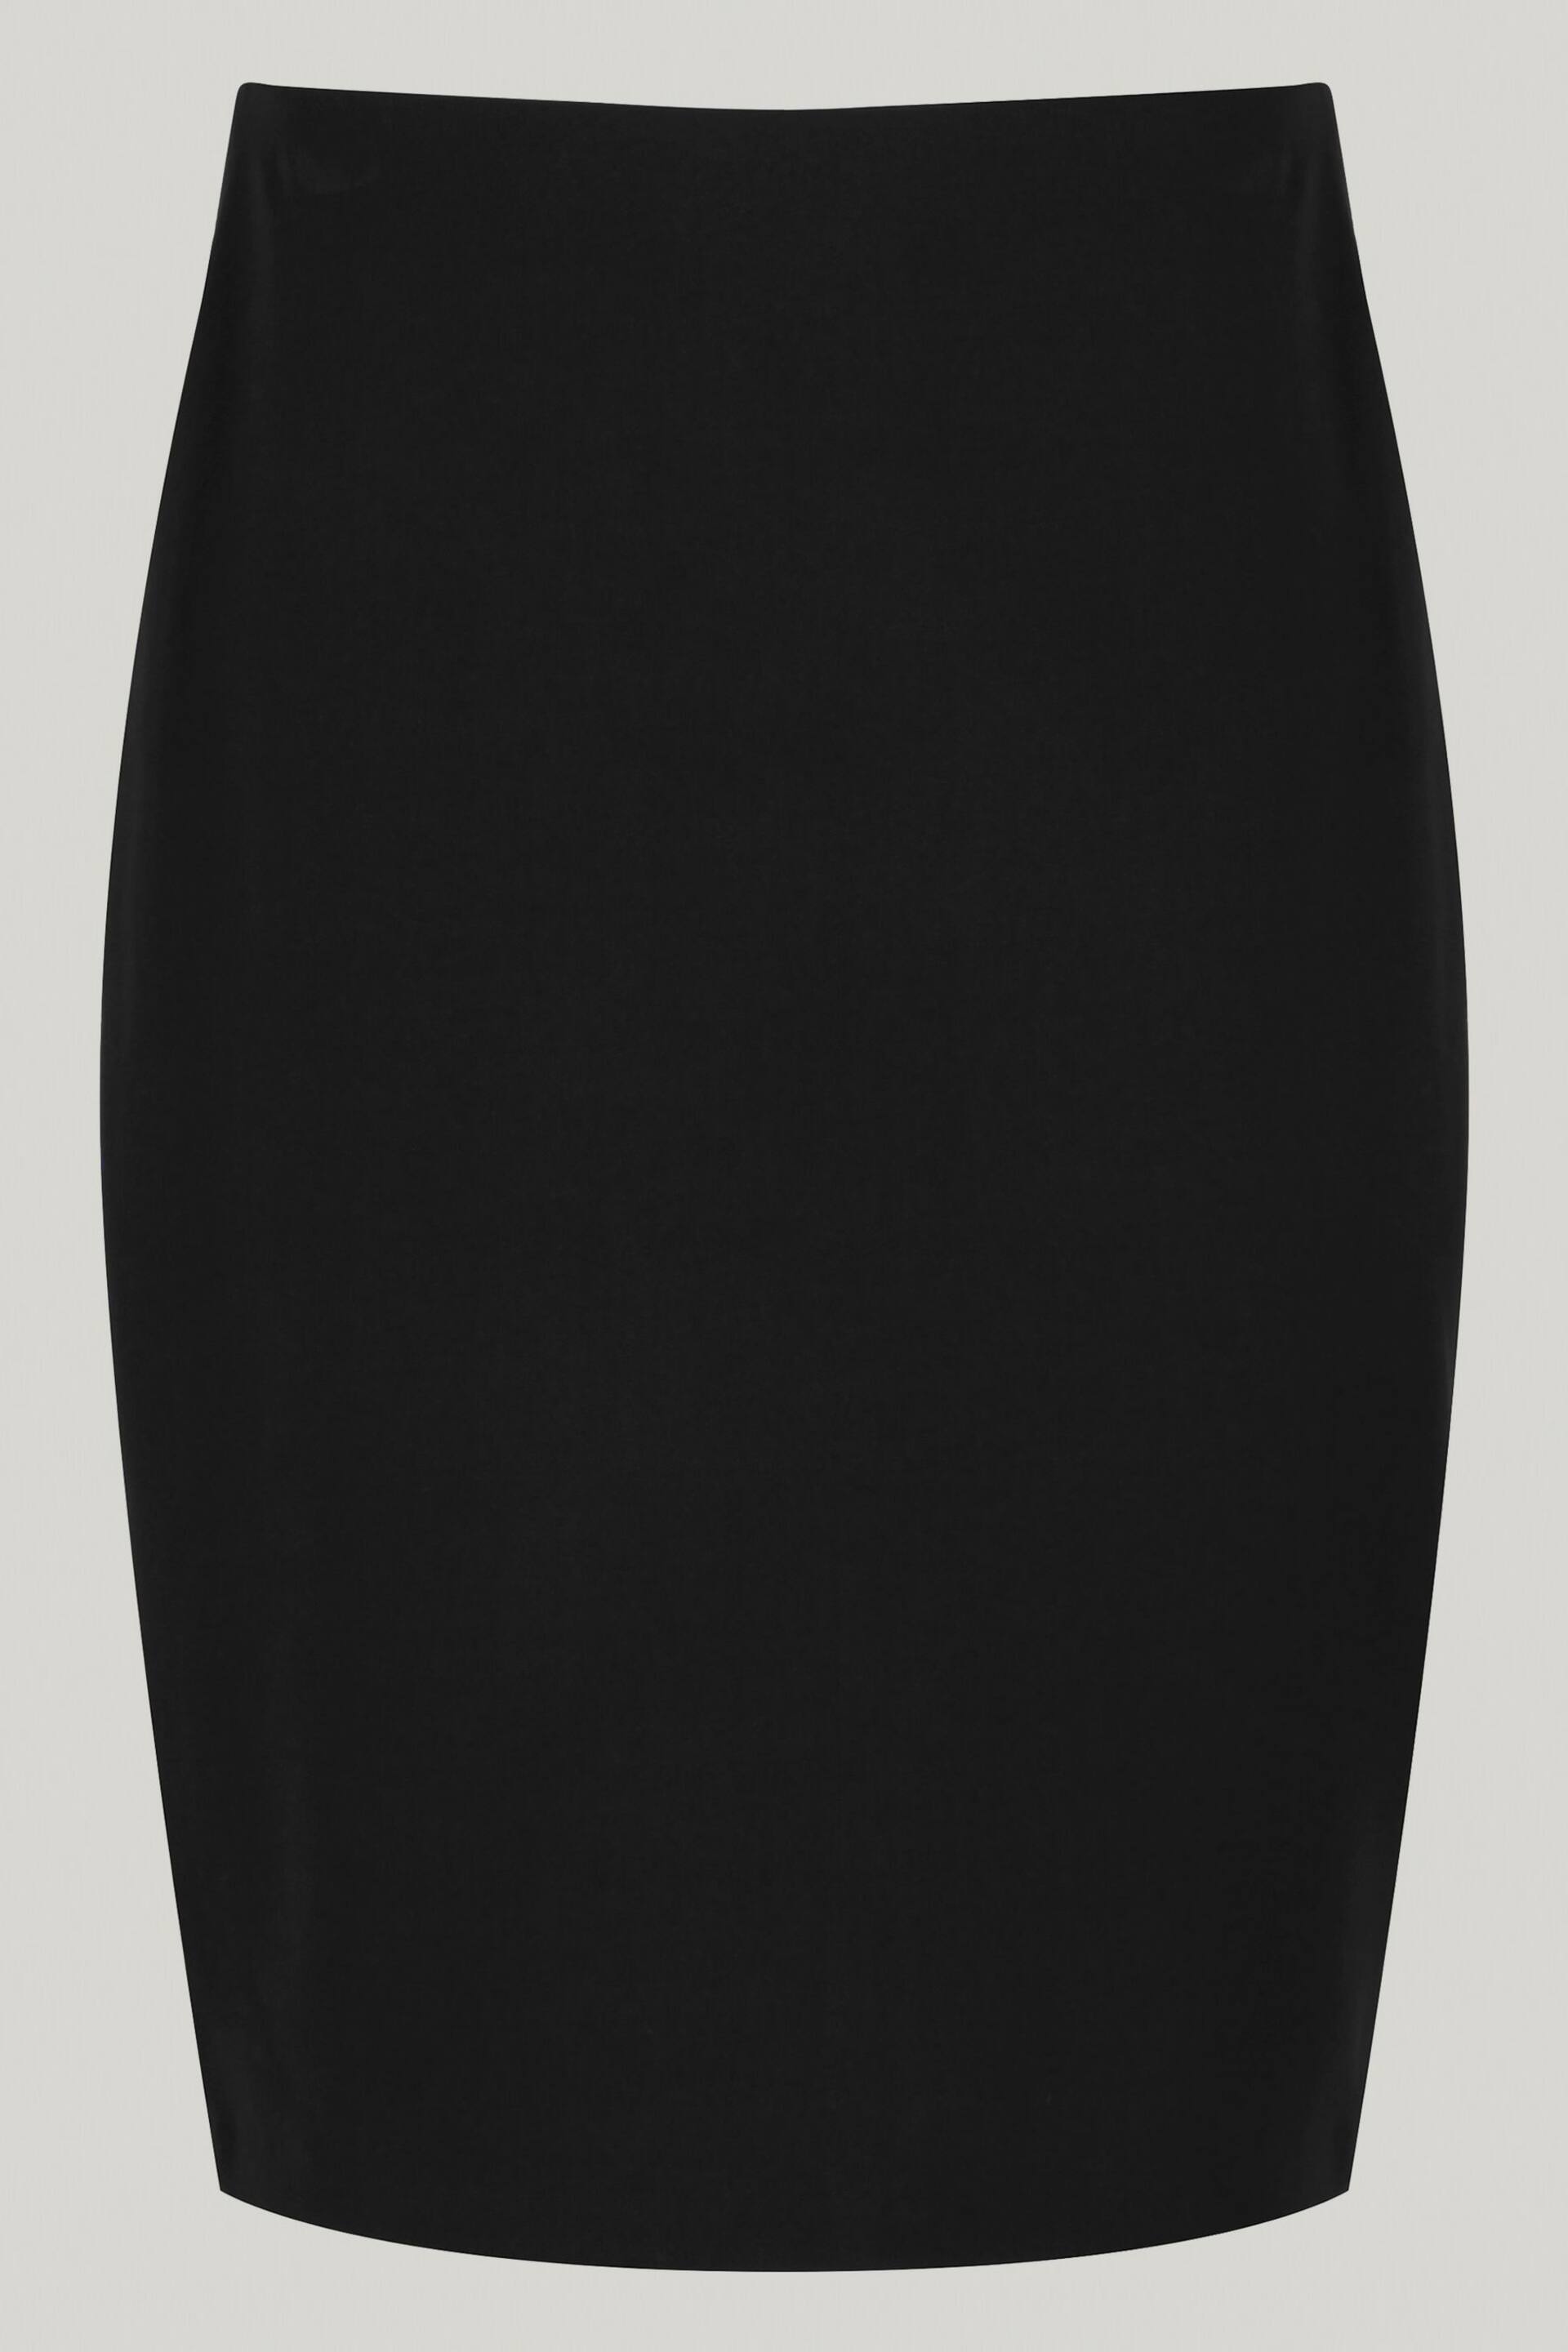 Trutex Black 18" Pencil School Skirt (10-15 Yrs) - Image 4 of 5